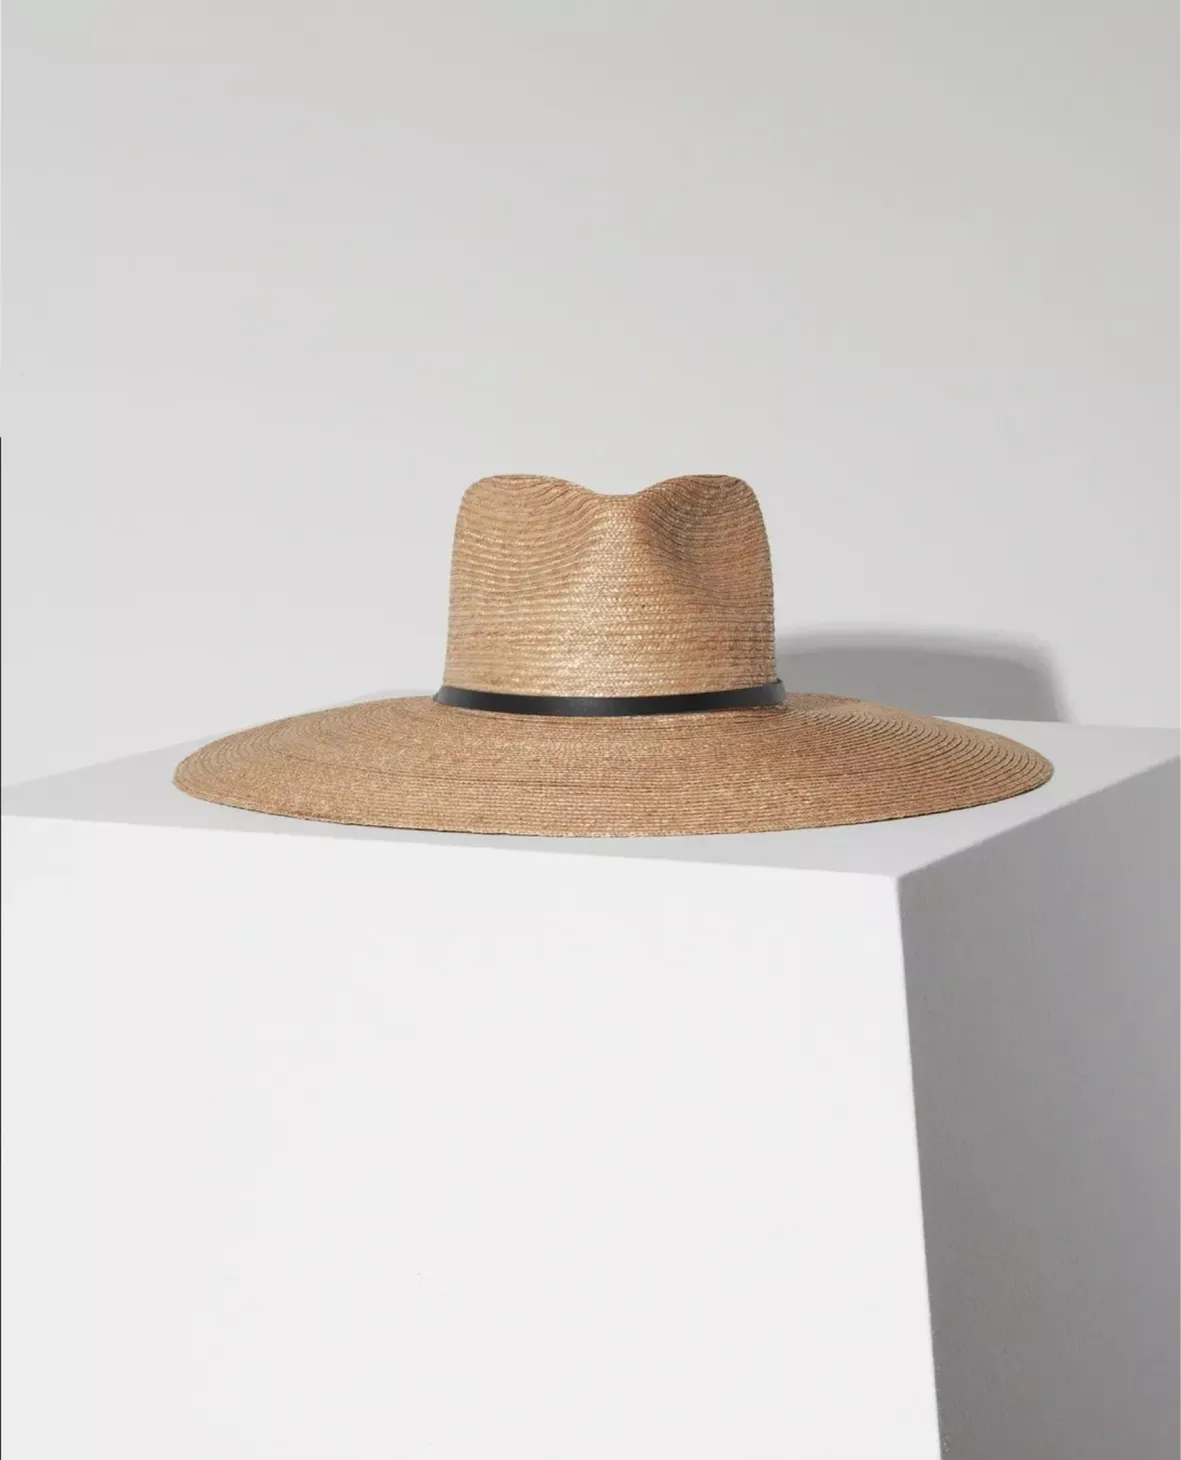 Womens Summer Jenni Kayne Straw Hat With Wide Brim, UV Protection